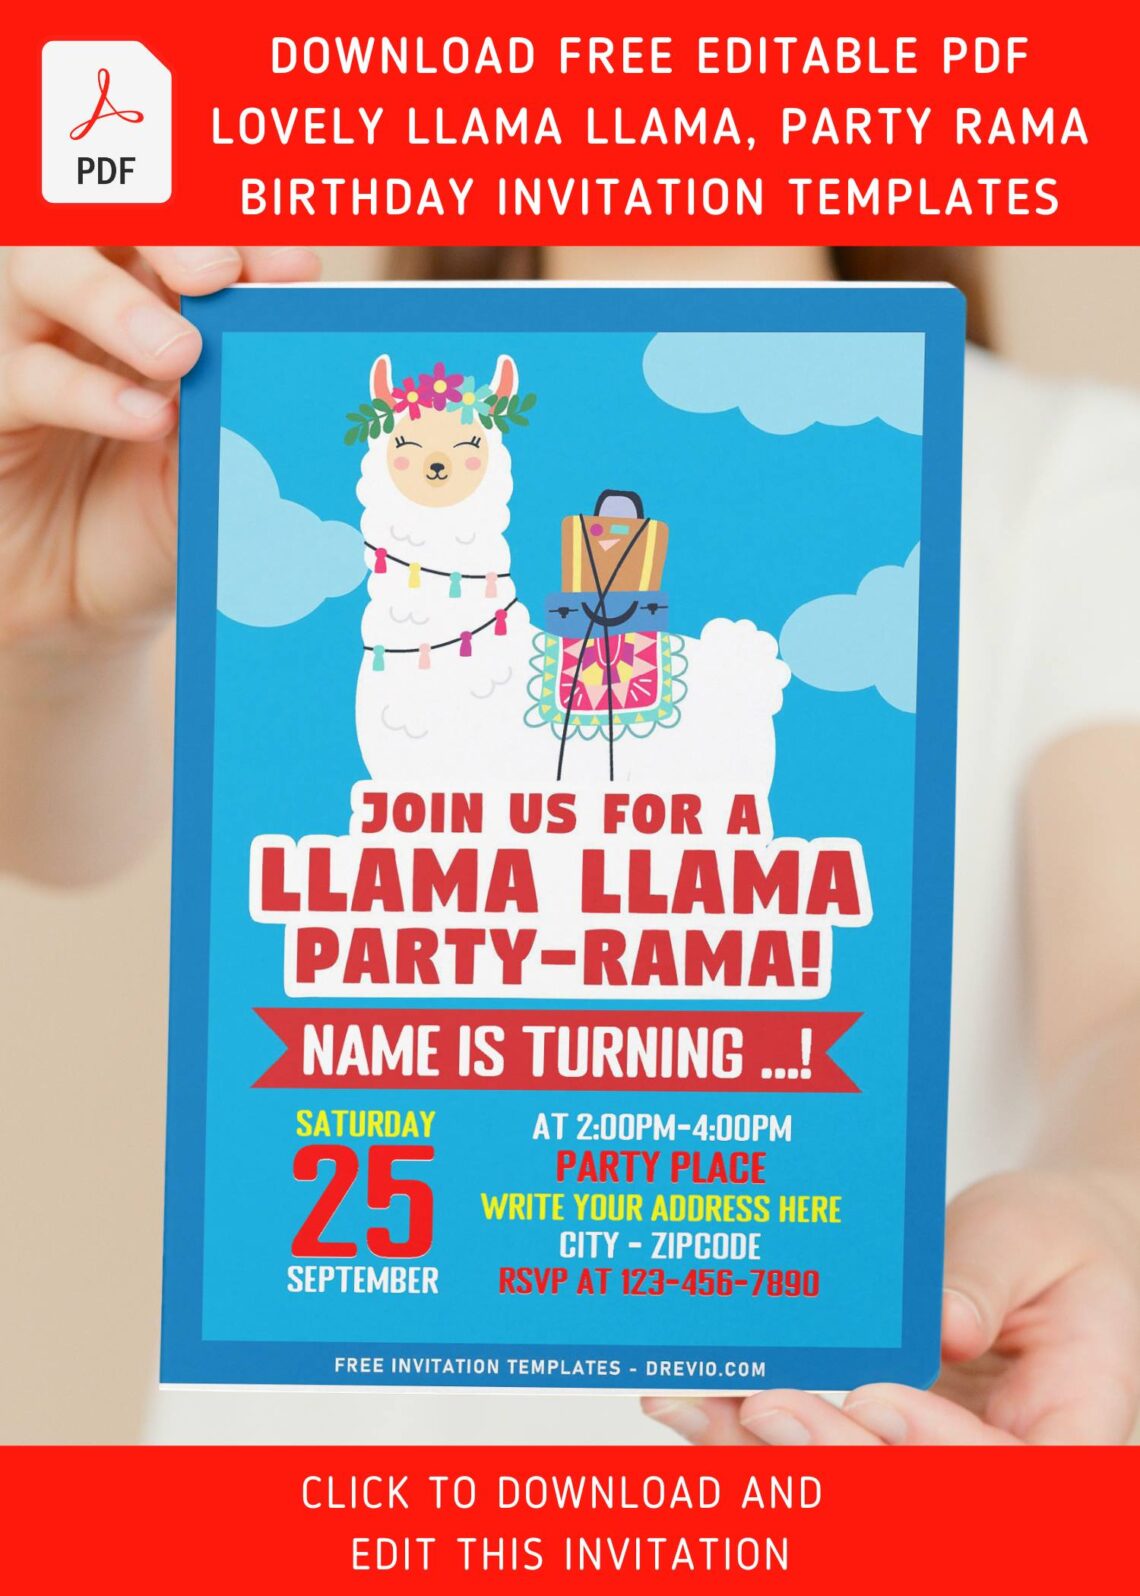 (Free Editable PDF) Lovely Llama Party-Rama Birthday Invitation Templates with editable text